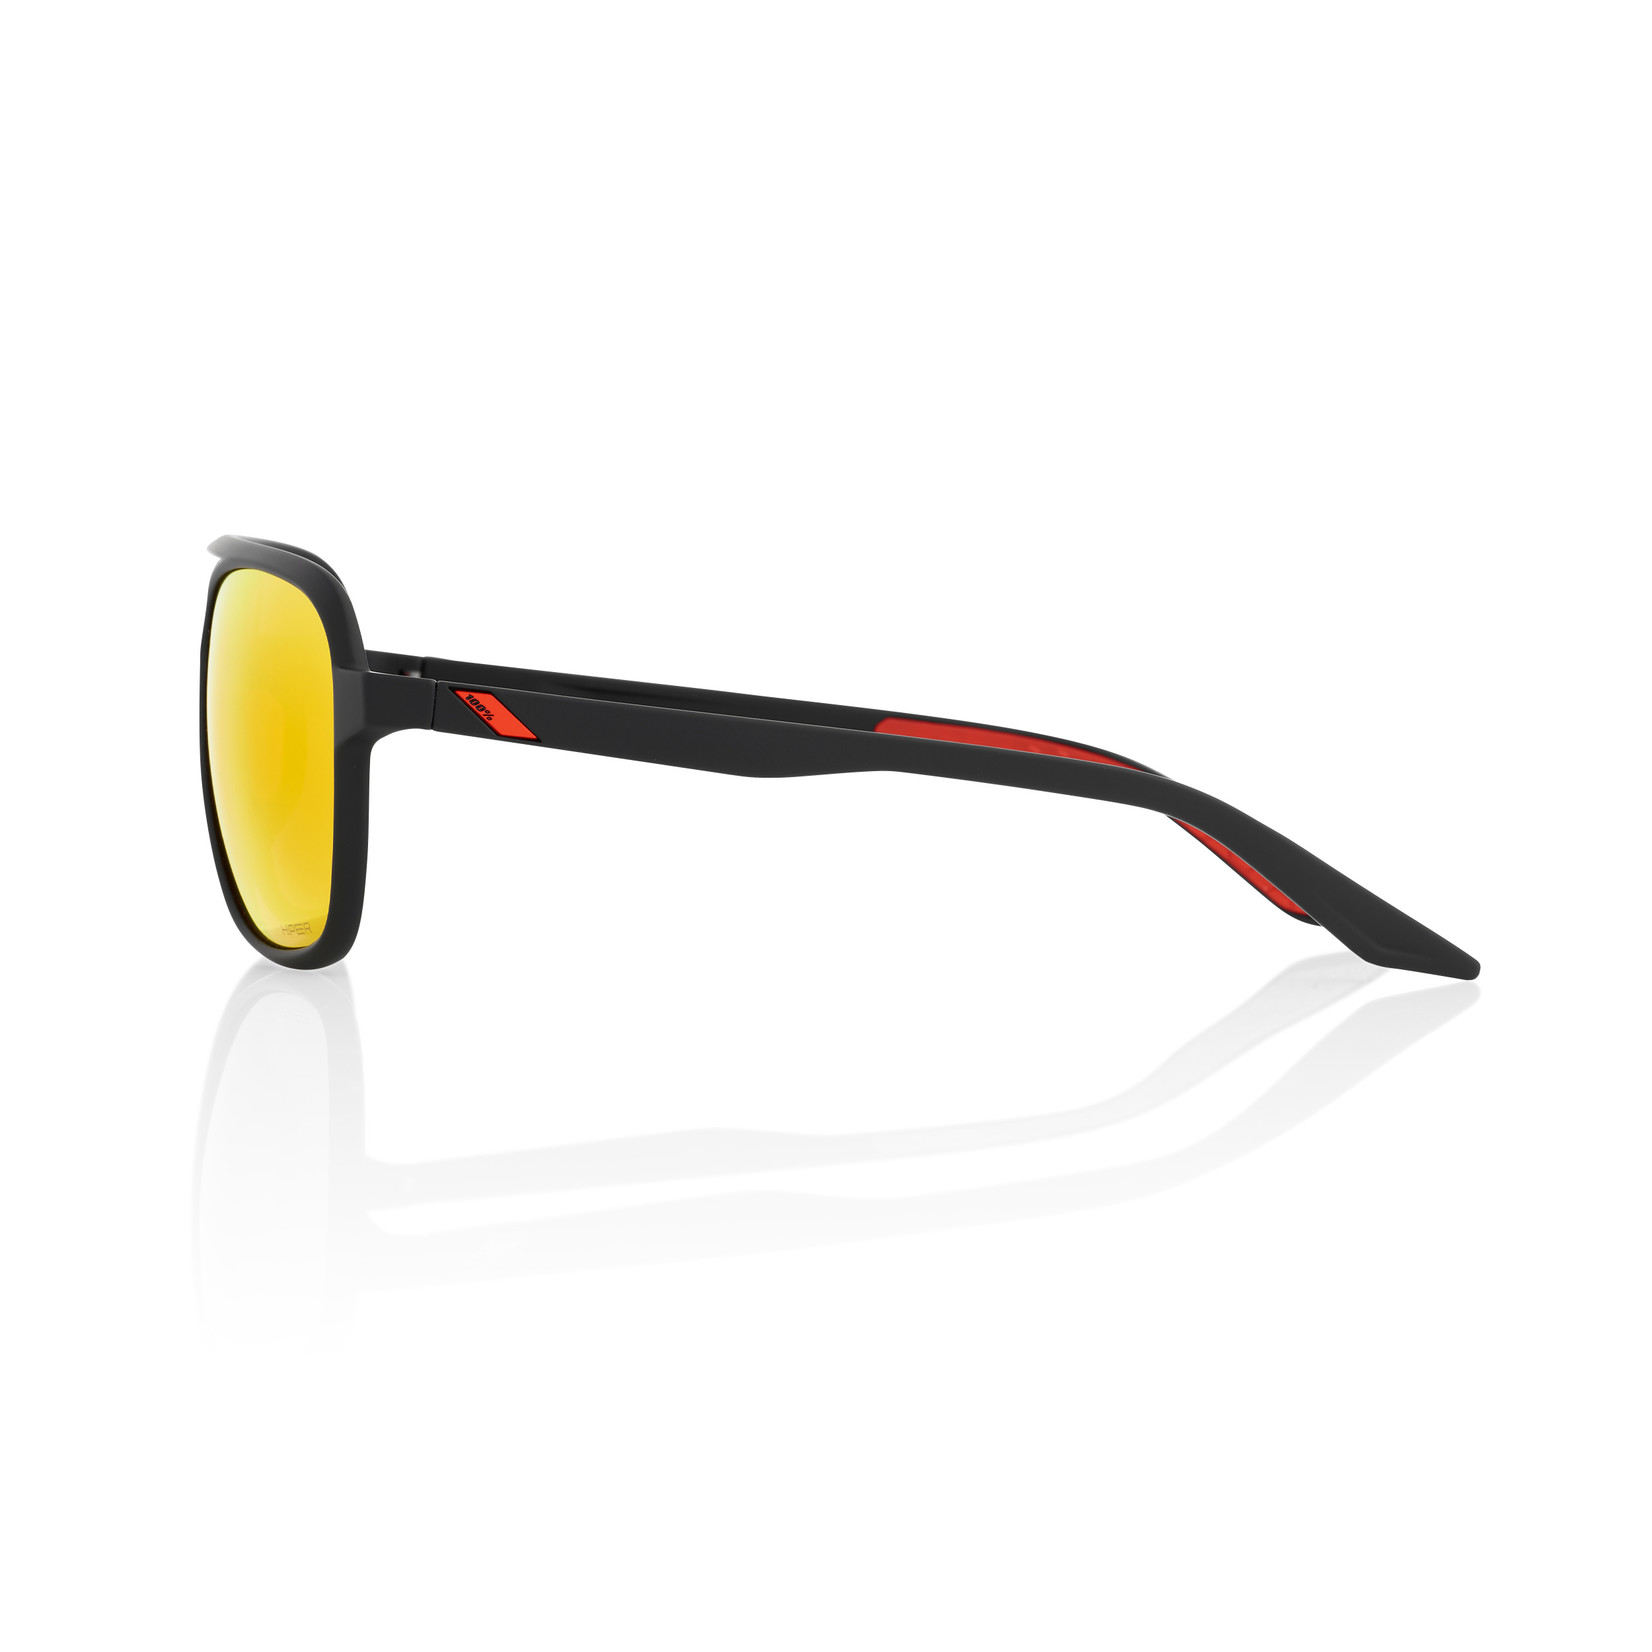 100 Percent 100% Kasia Sunglasses Soft Tact Black-Hiper Red Polycarbonate 100% UV Protection